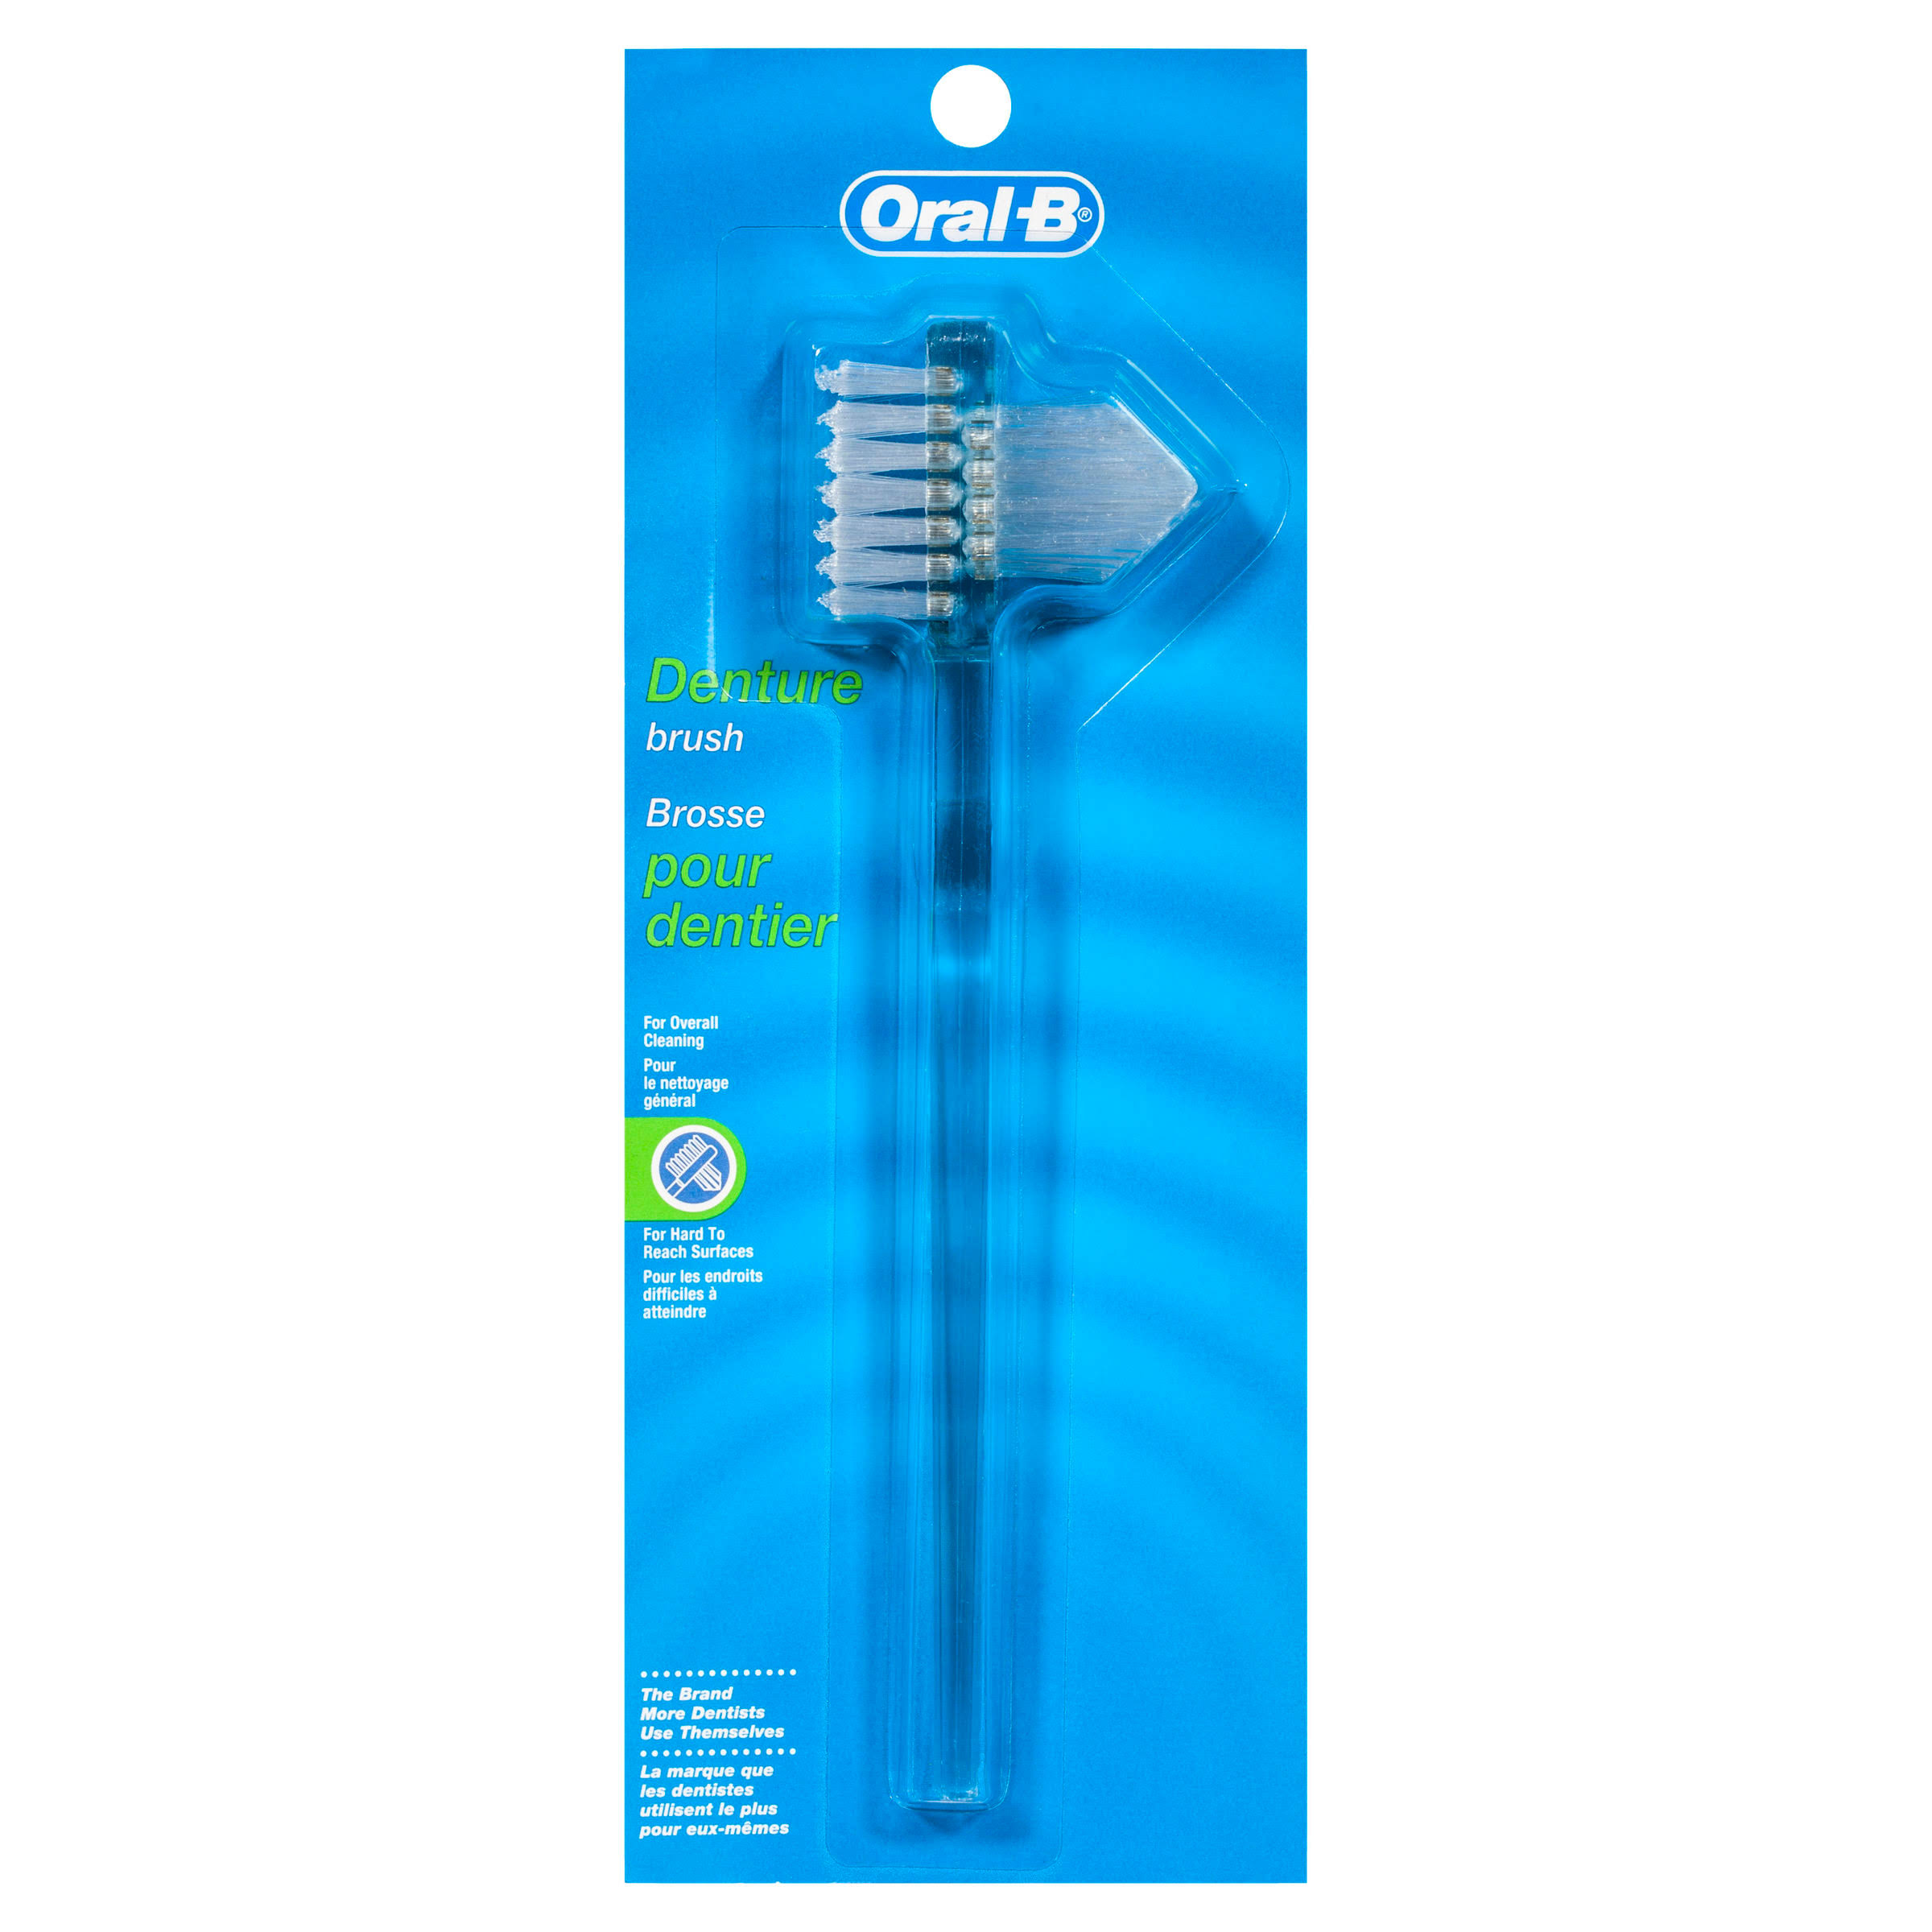 Oral-B Denture Toothbrush Dual Head